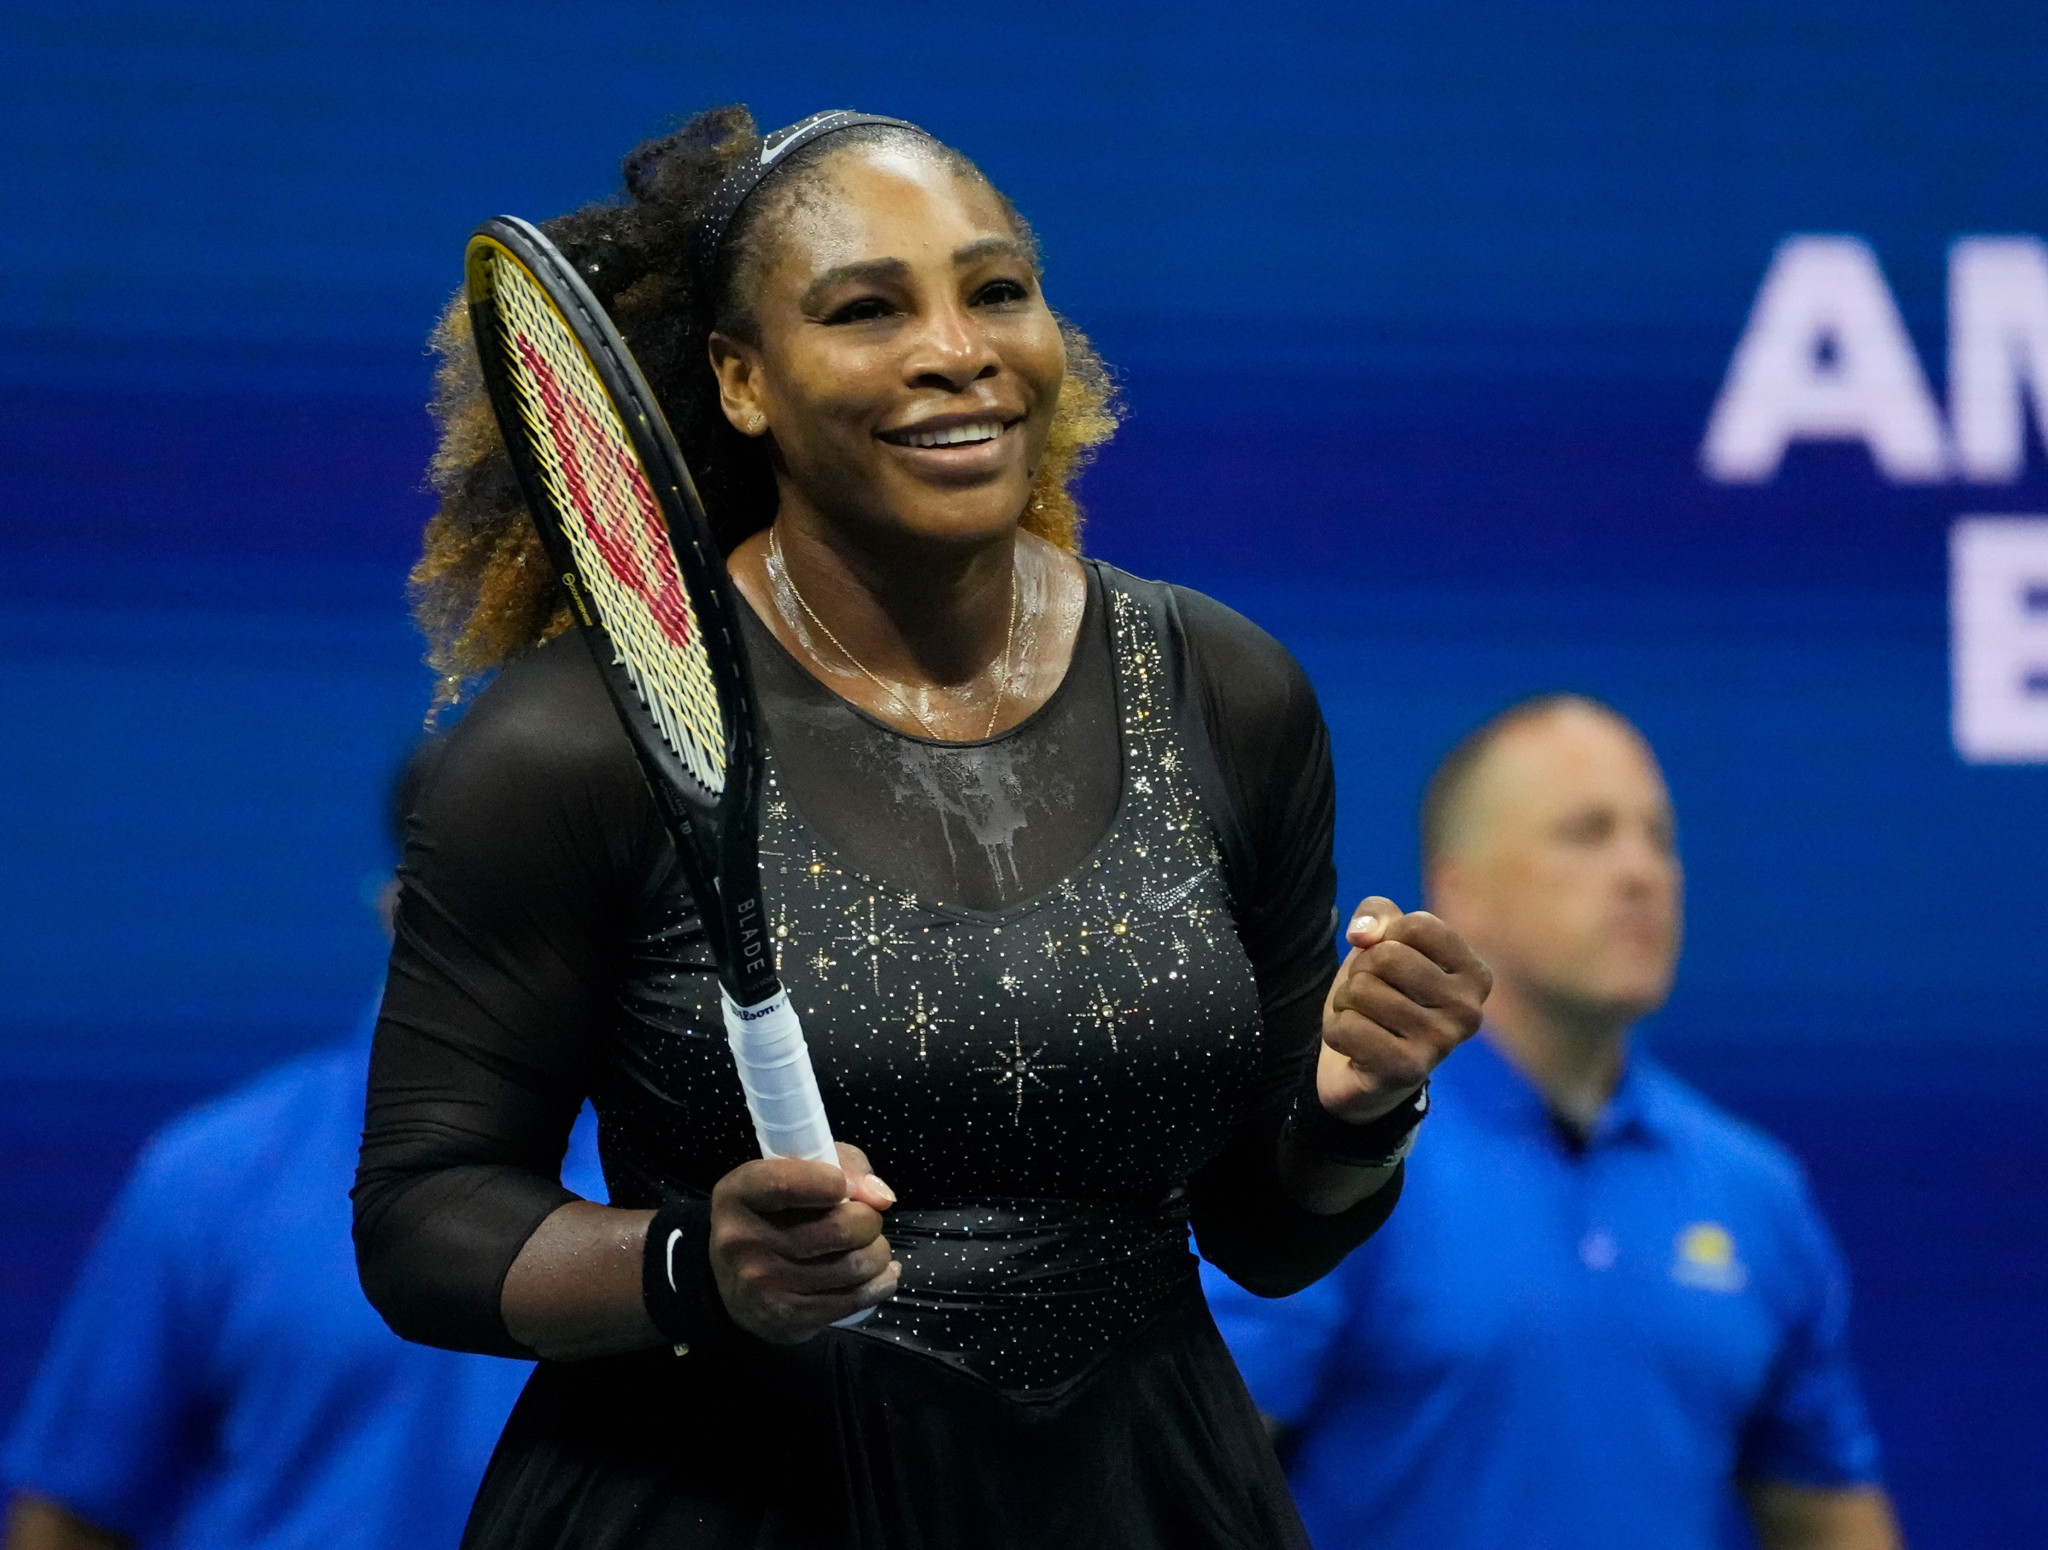 StubHub Sees ‘Huge Jump’ In US Open Ticket Sales Thanks to Serena